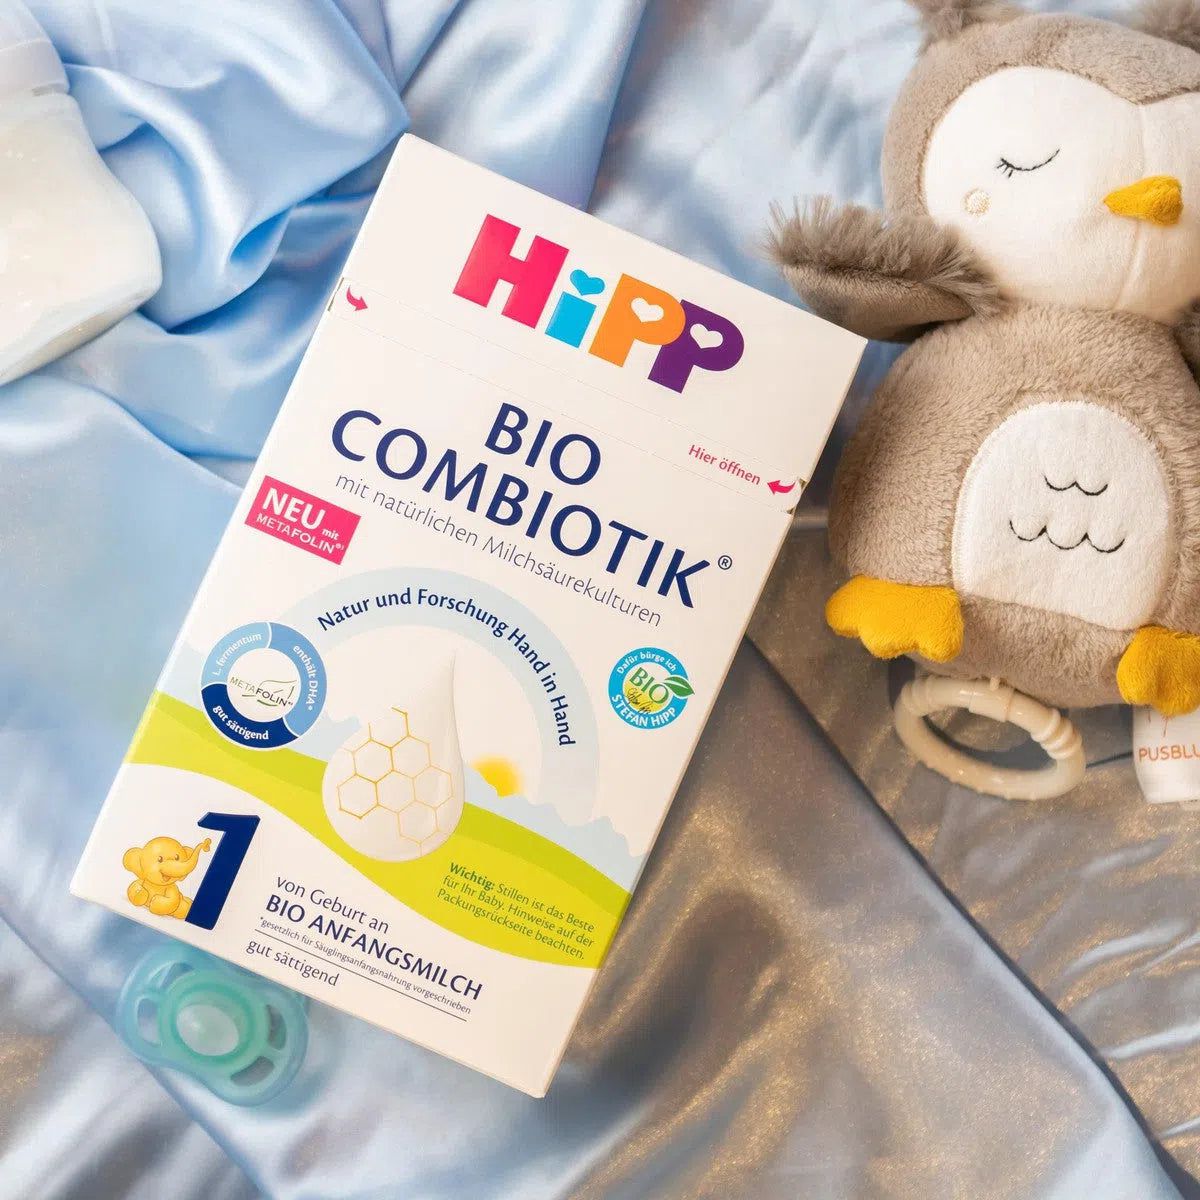 HiPP German Stage 3 Baby Formula Bio Combiotik (600g)